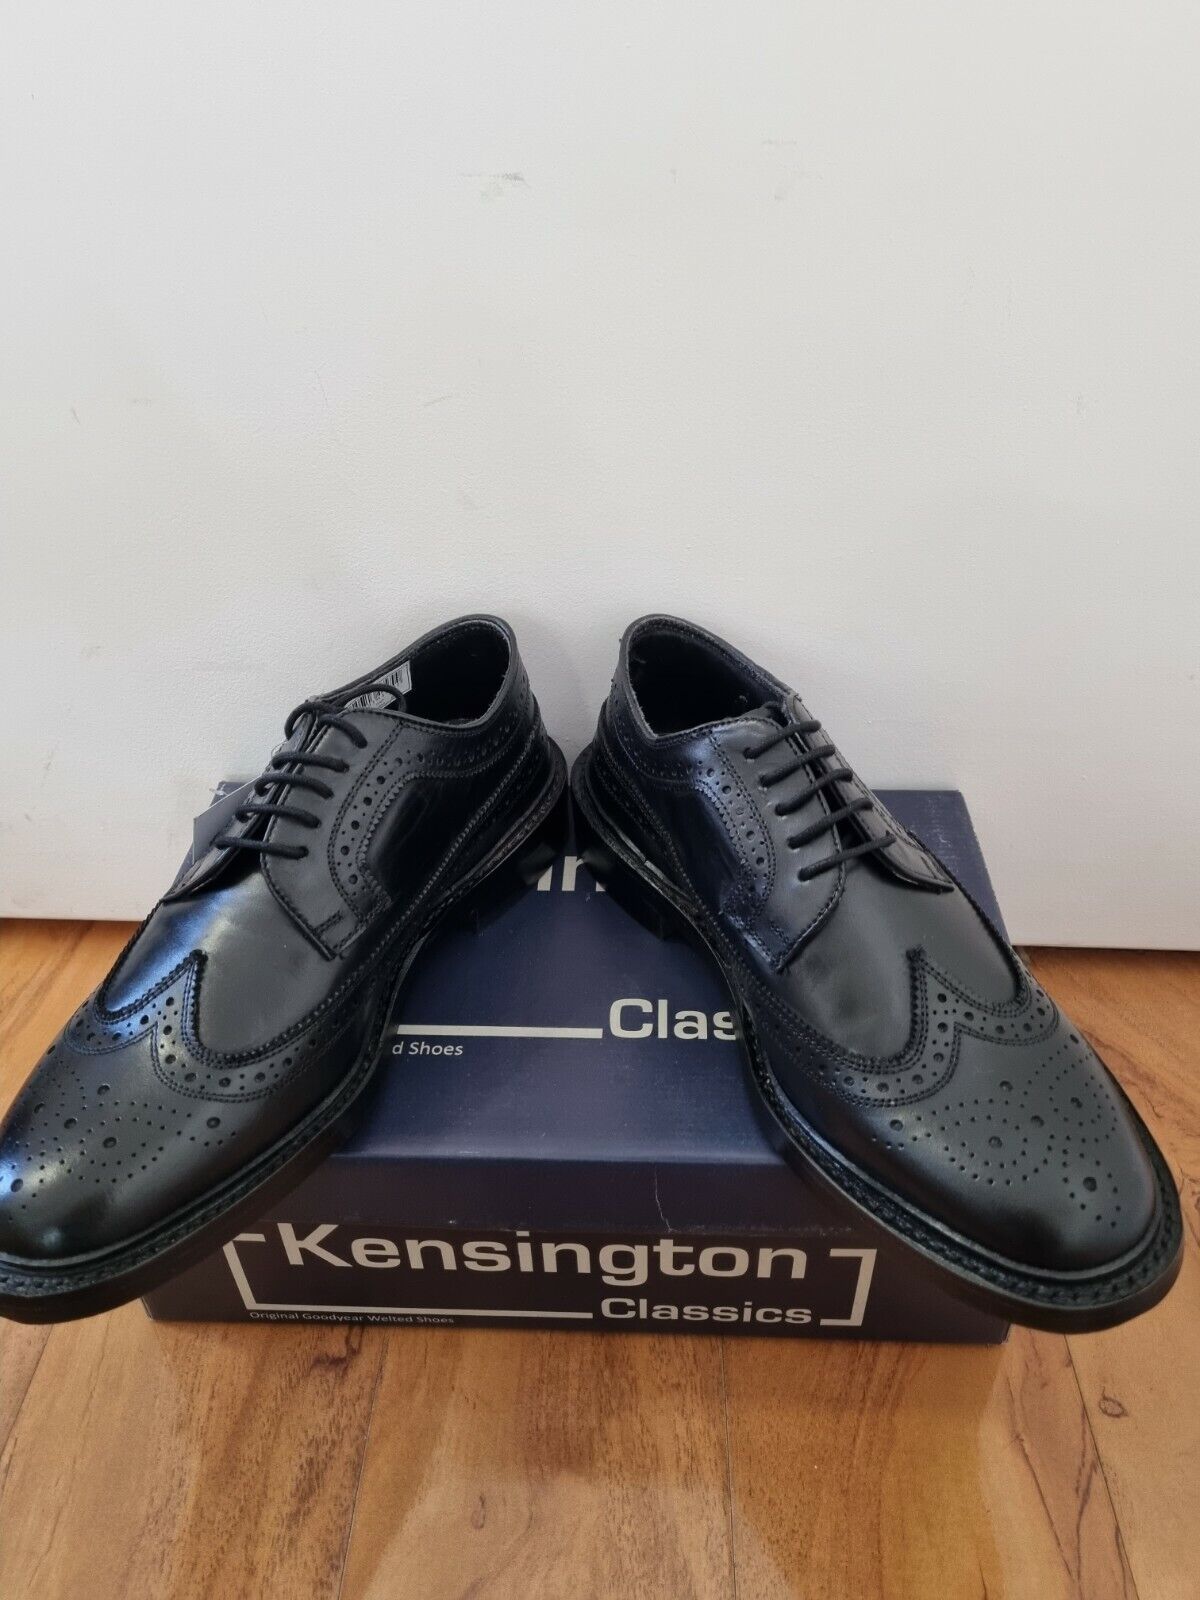 Kensington - Full American Brouge Classic – Black Leather